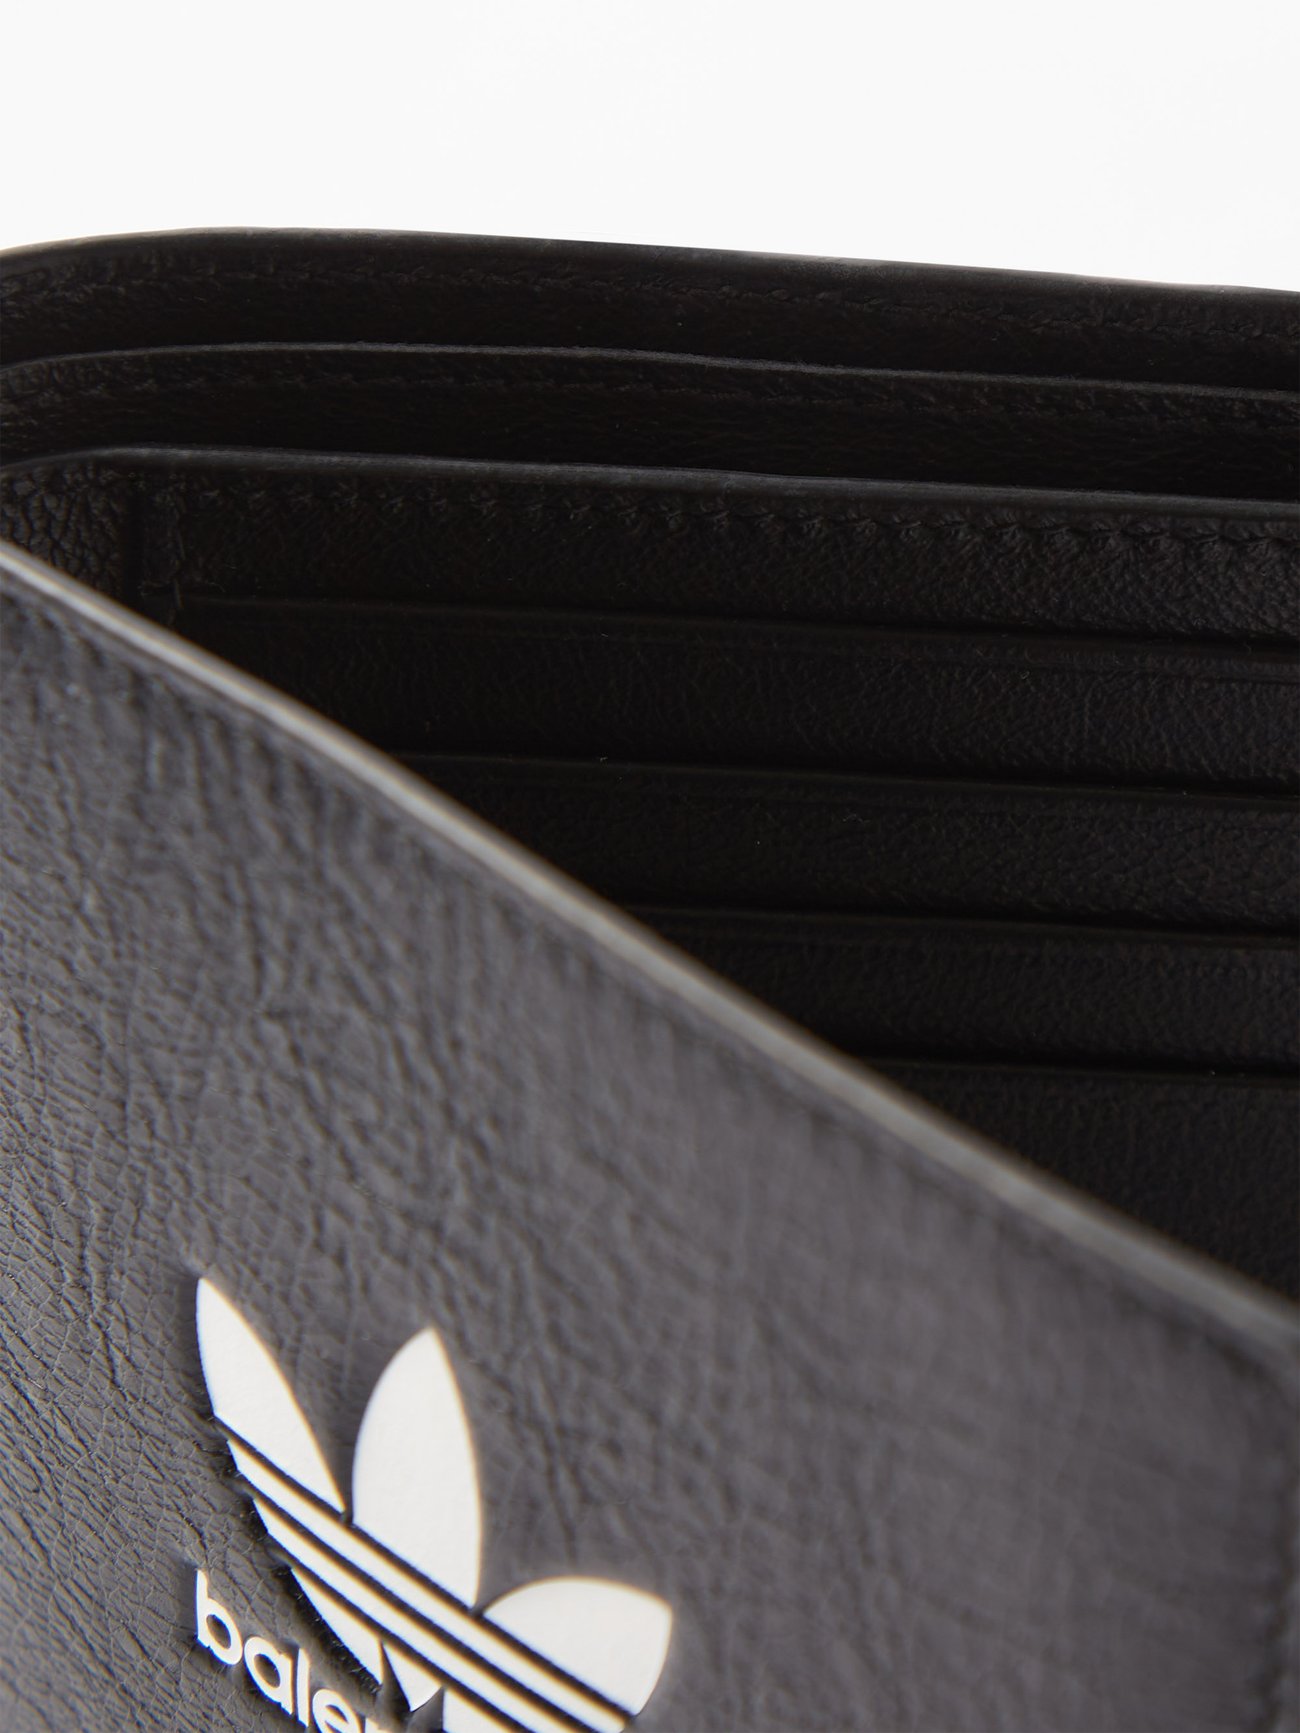 Black X adidas trefoil-logo crinkled-leather wallet | Balenciaga | MATCHES  UK